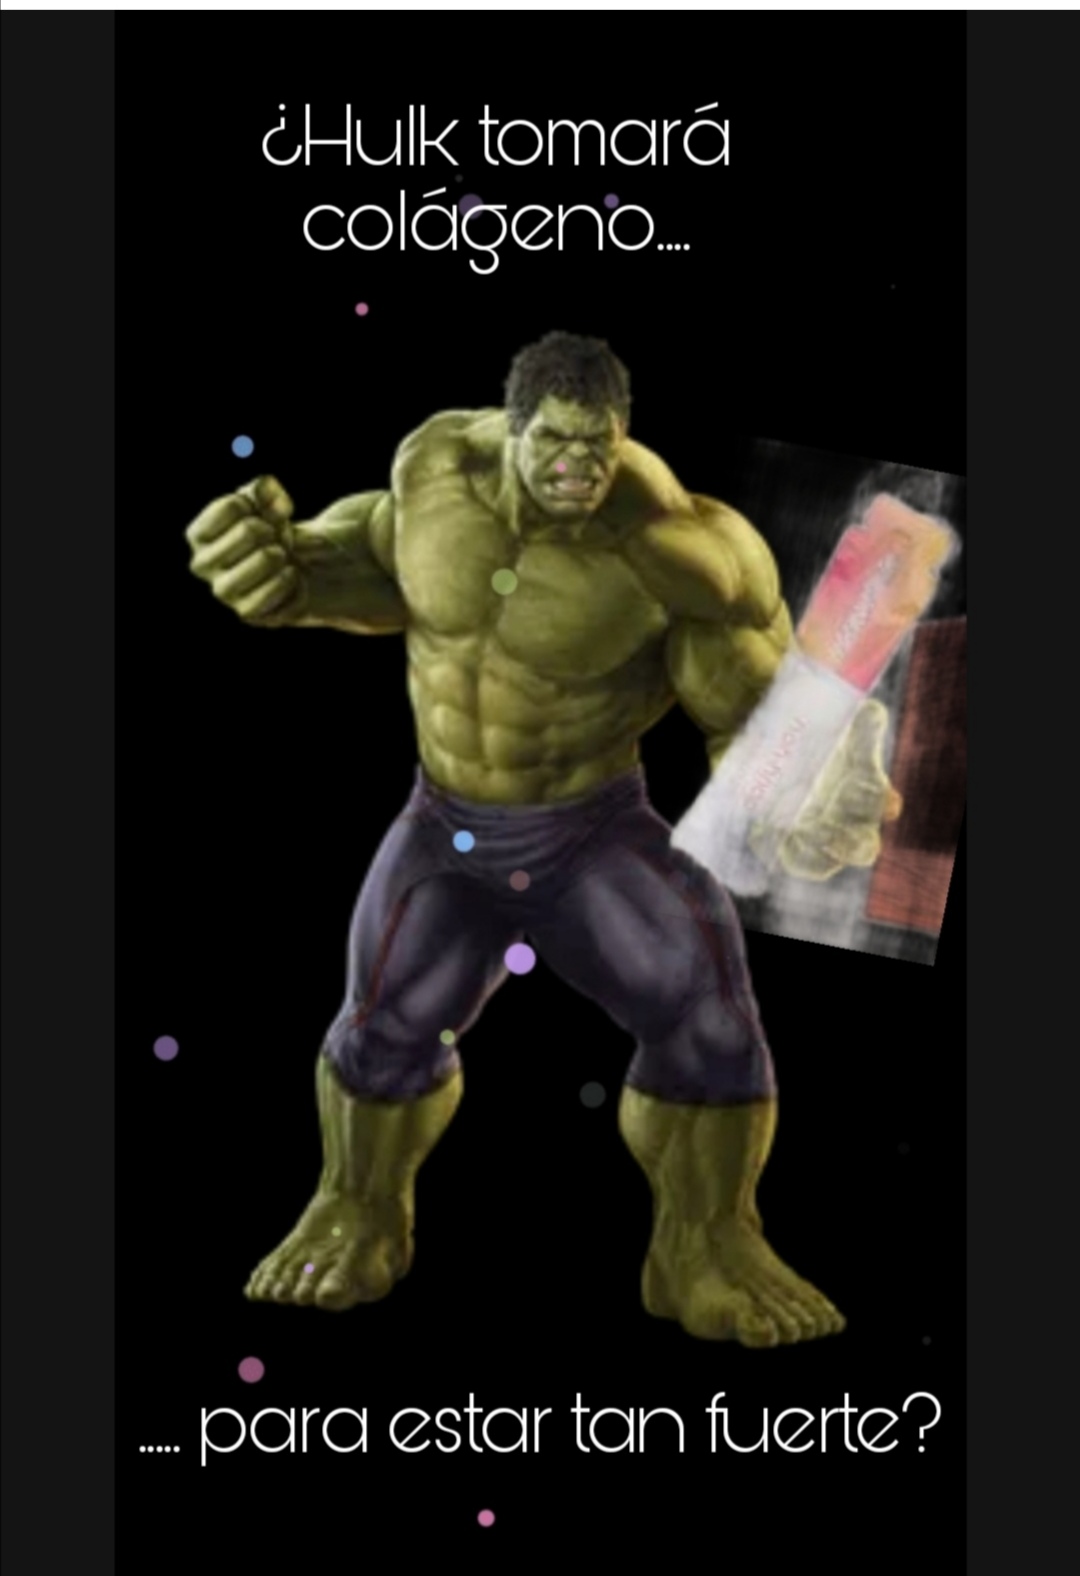 Hulk tomard
colclezaloN

 

i” Sete estar tan fuerte?